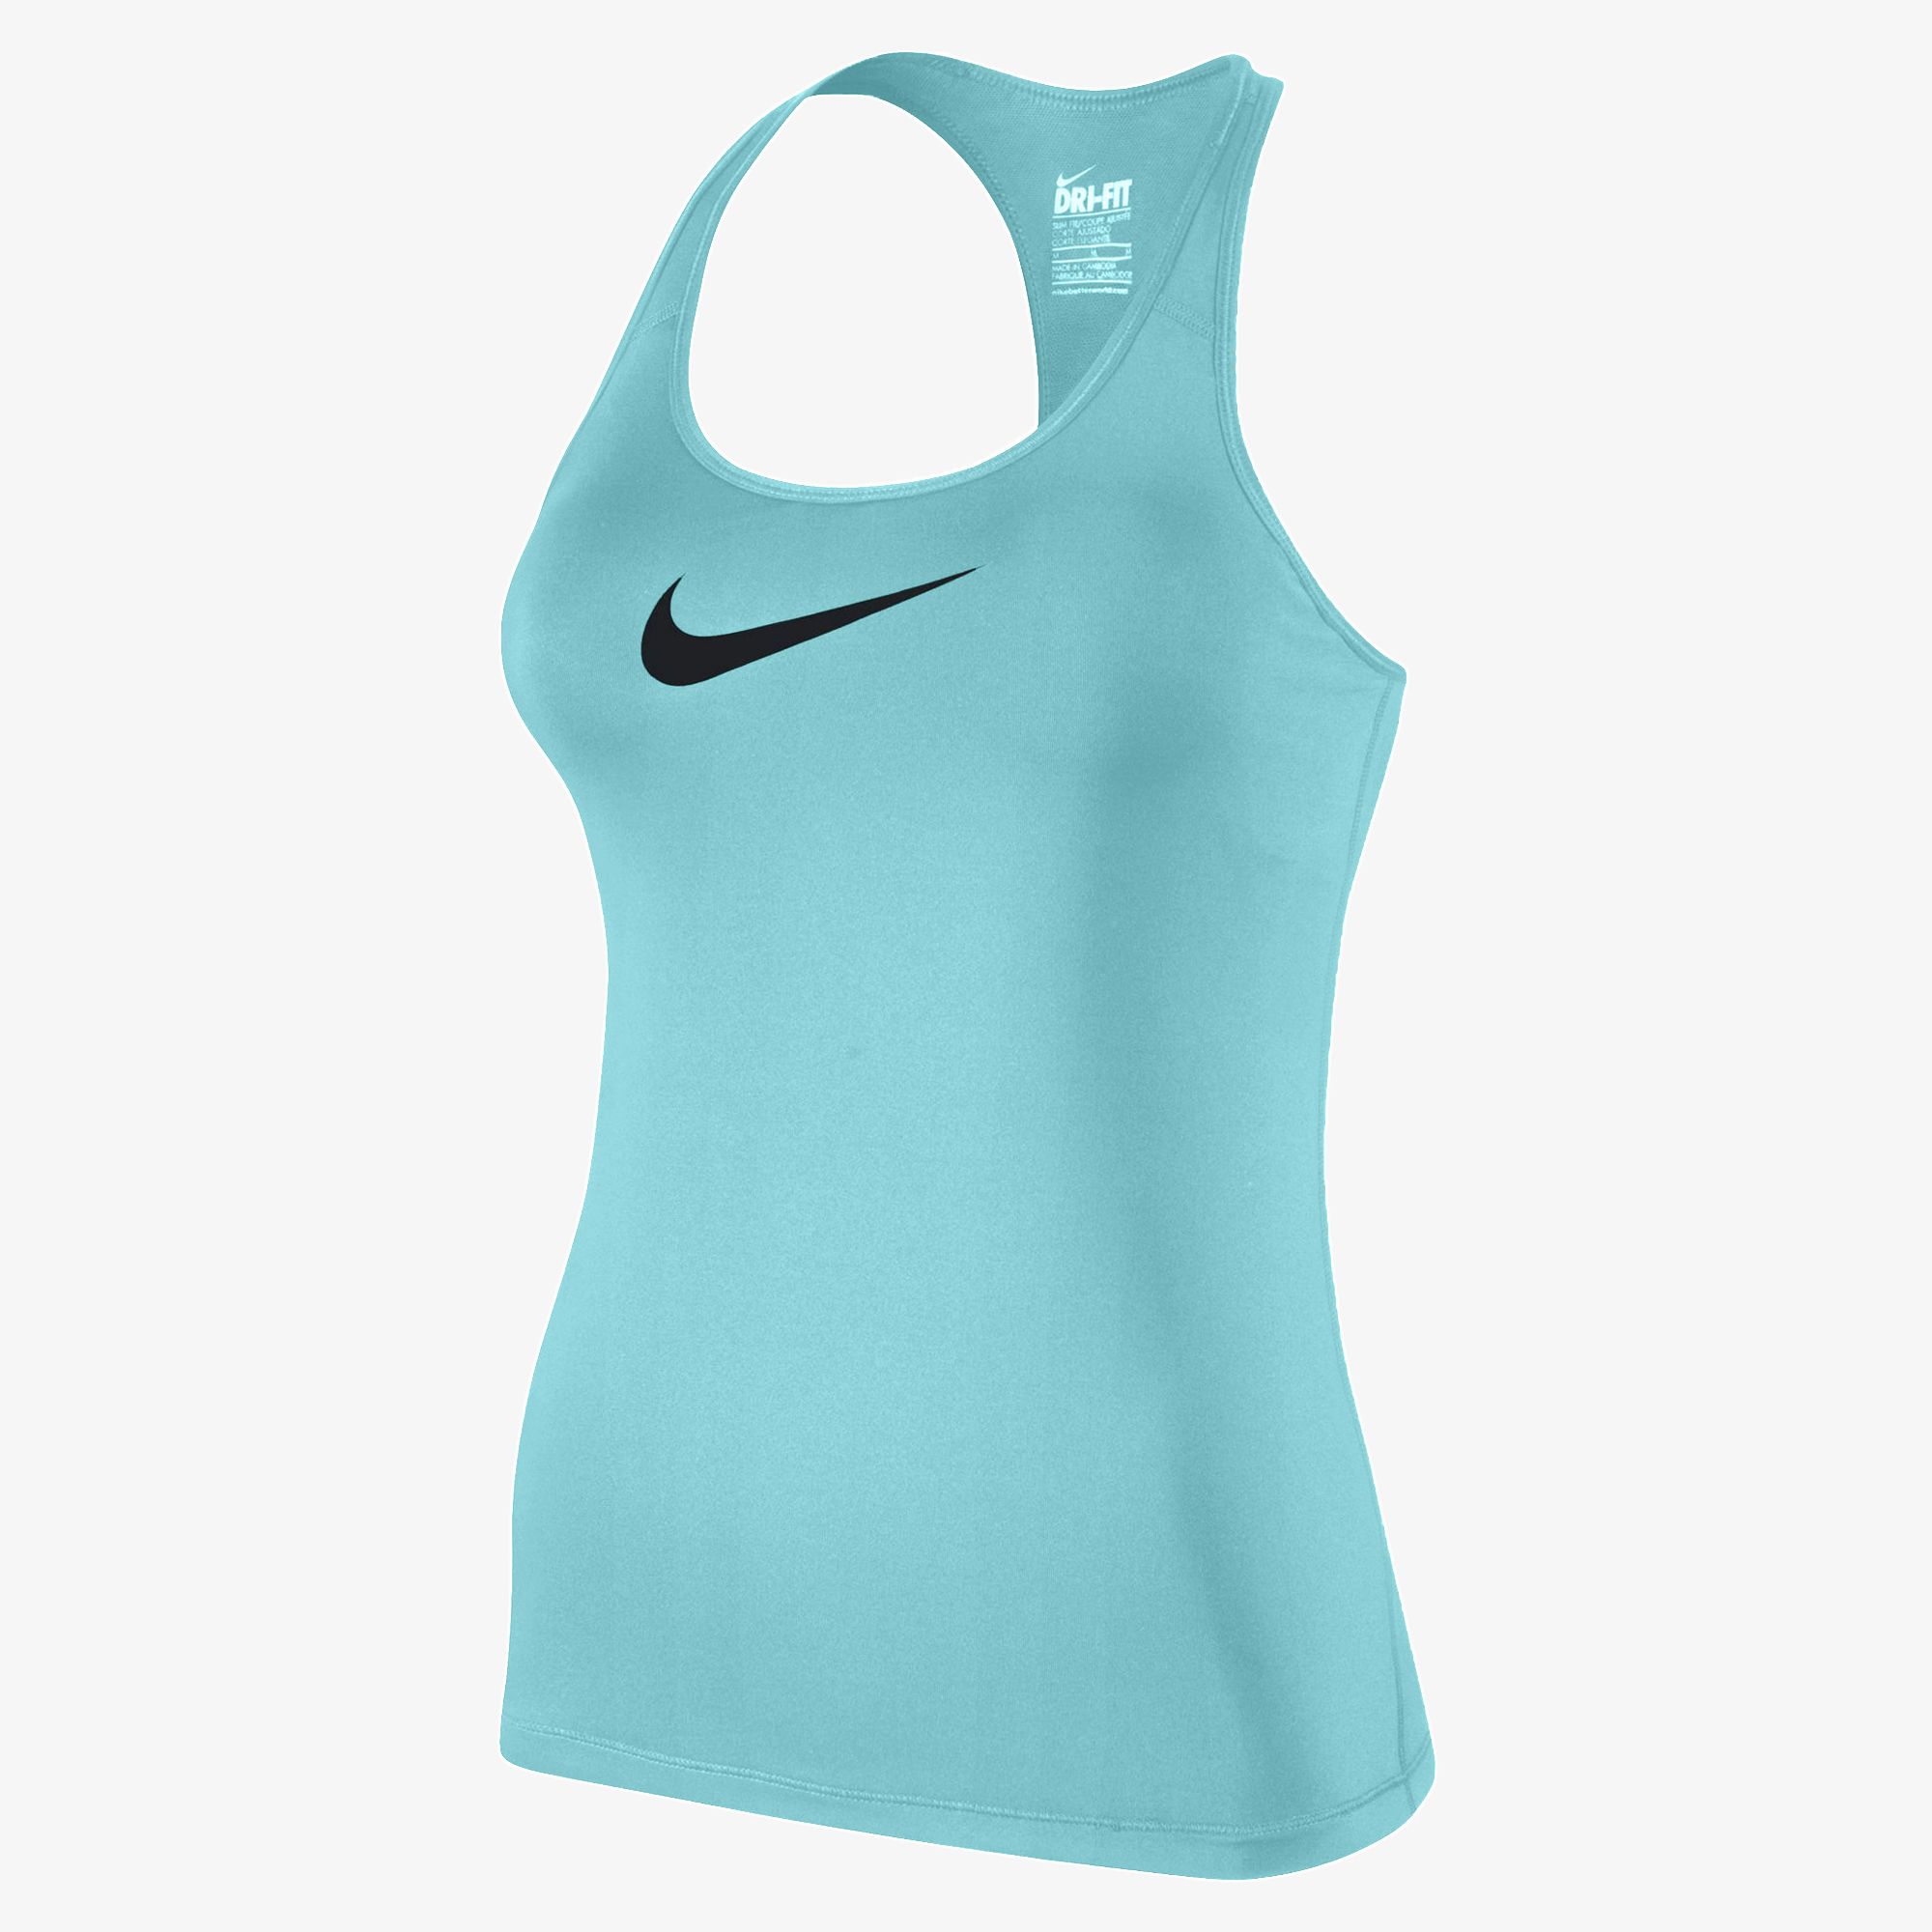  Nike Flex Swoosh Tank Top - Turquoise 